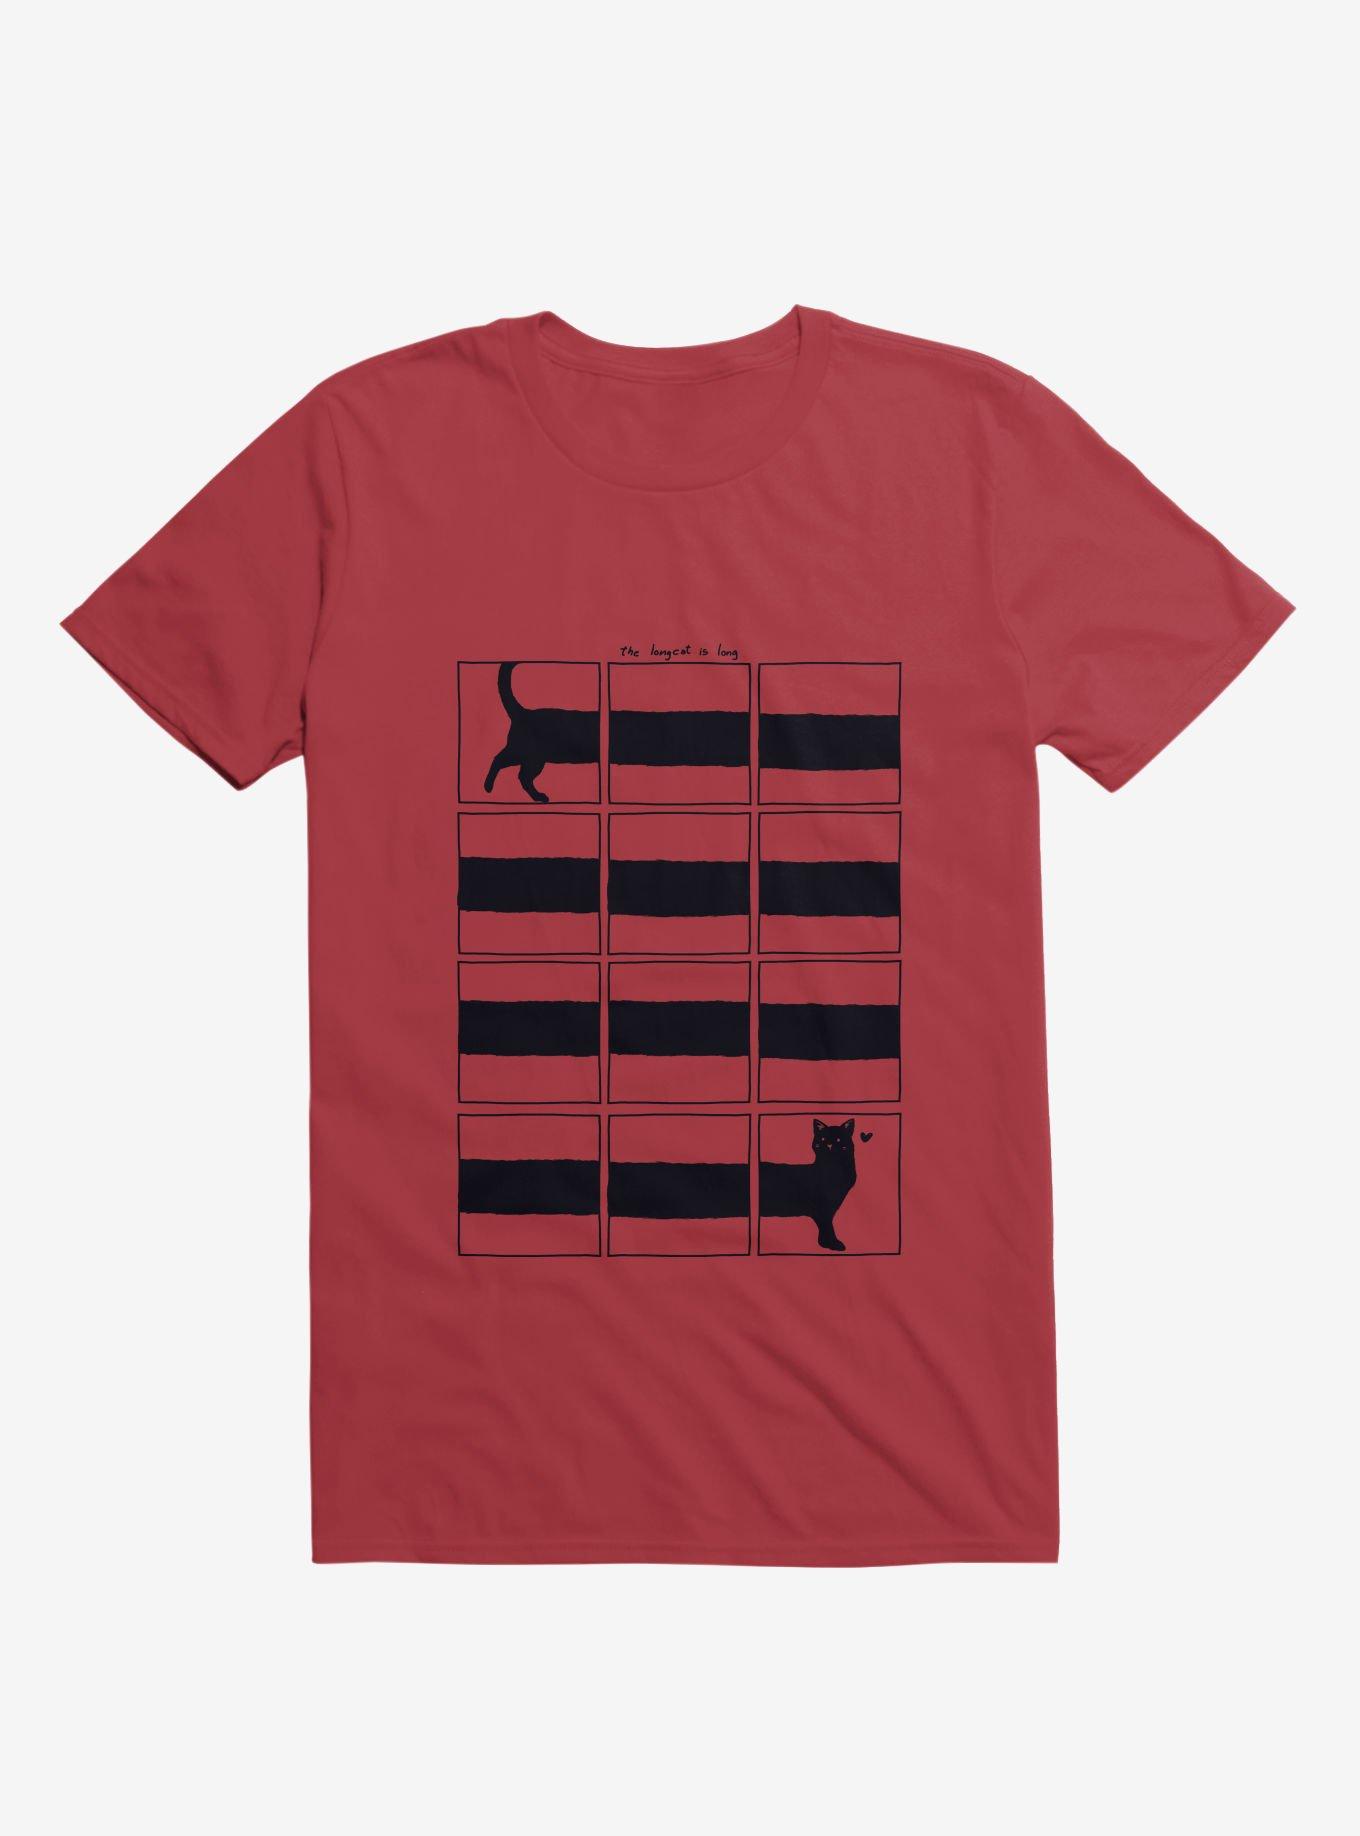 The Longcat Is Long Red T-Shirt